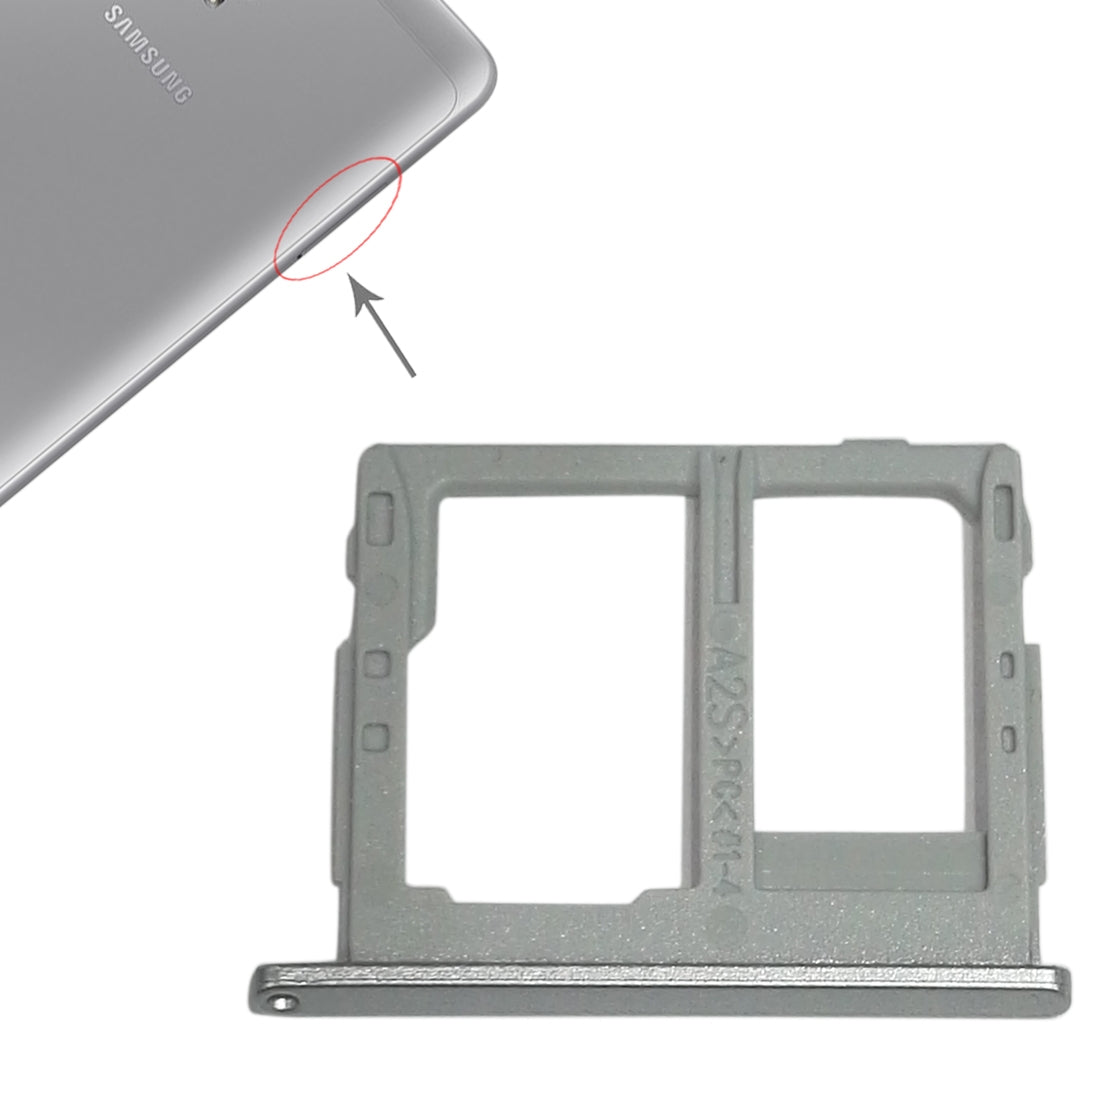 SIM / Micro SD Tray for Samsung Galaxy Tab A 8.0 / T380 / T385 Gray